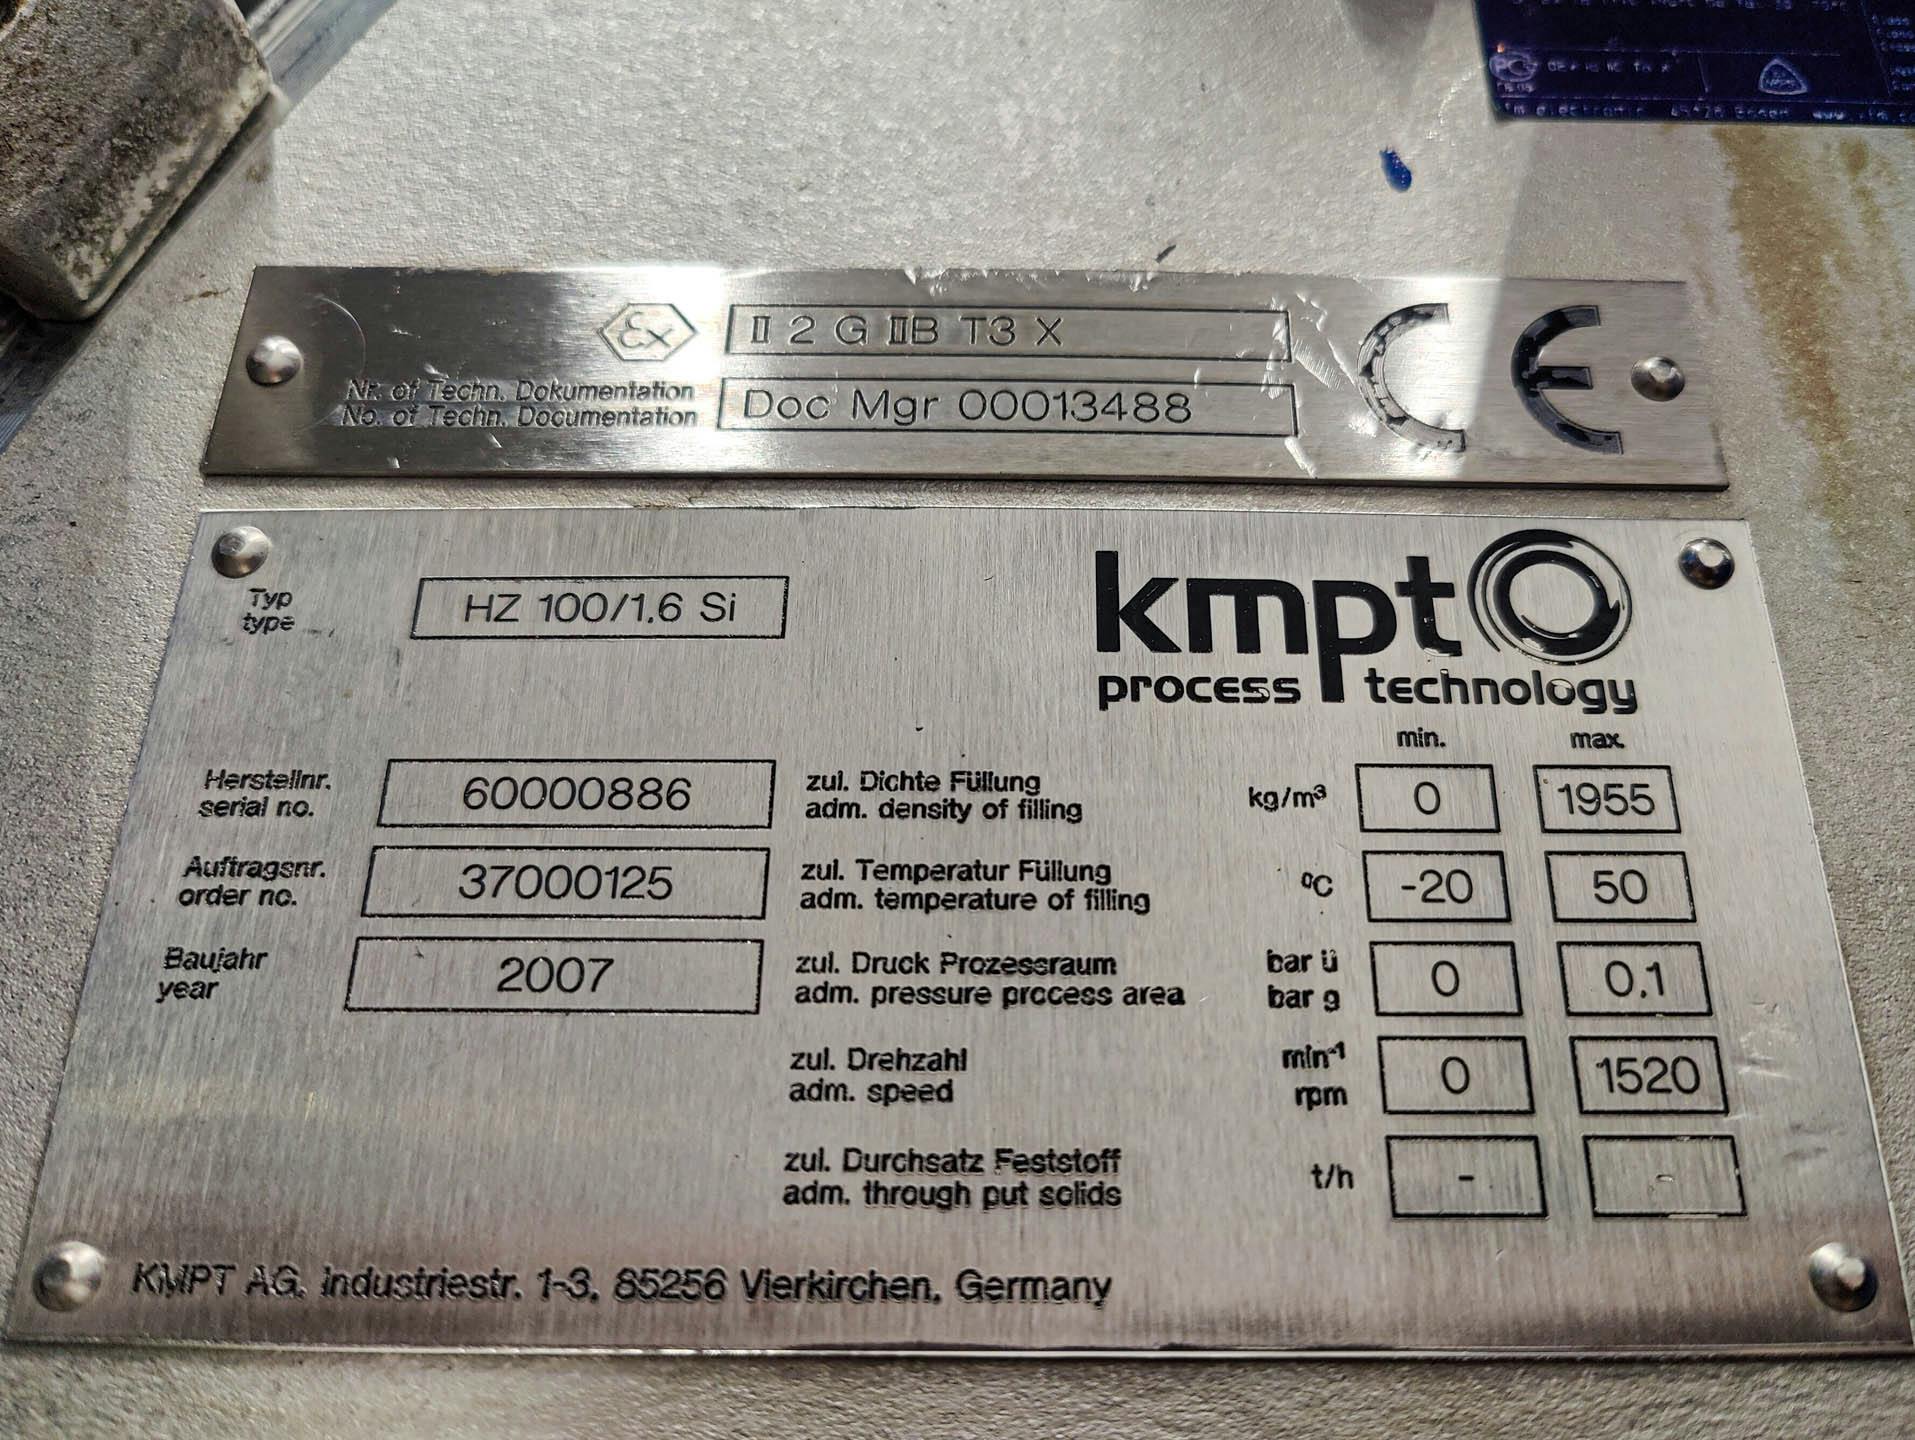 Andritz KMPT HZ-100/1.6 Si "syphon type centrifuge" - Centrífuga peladora - image 9